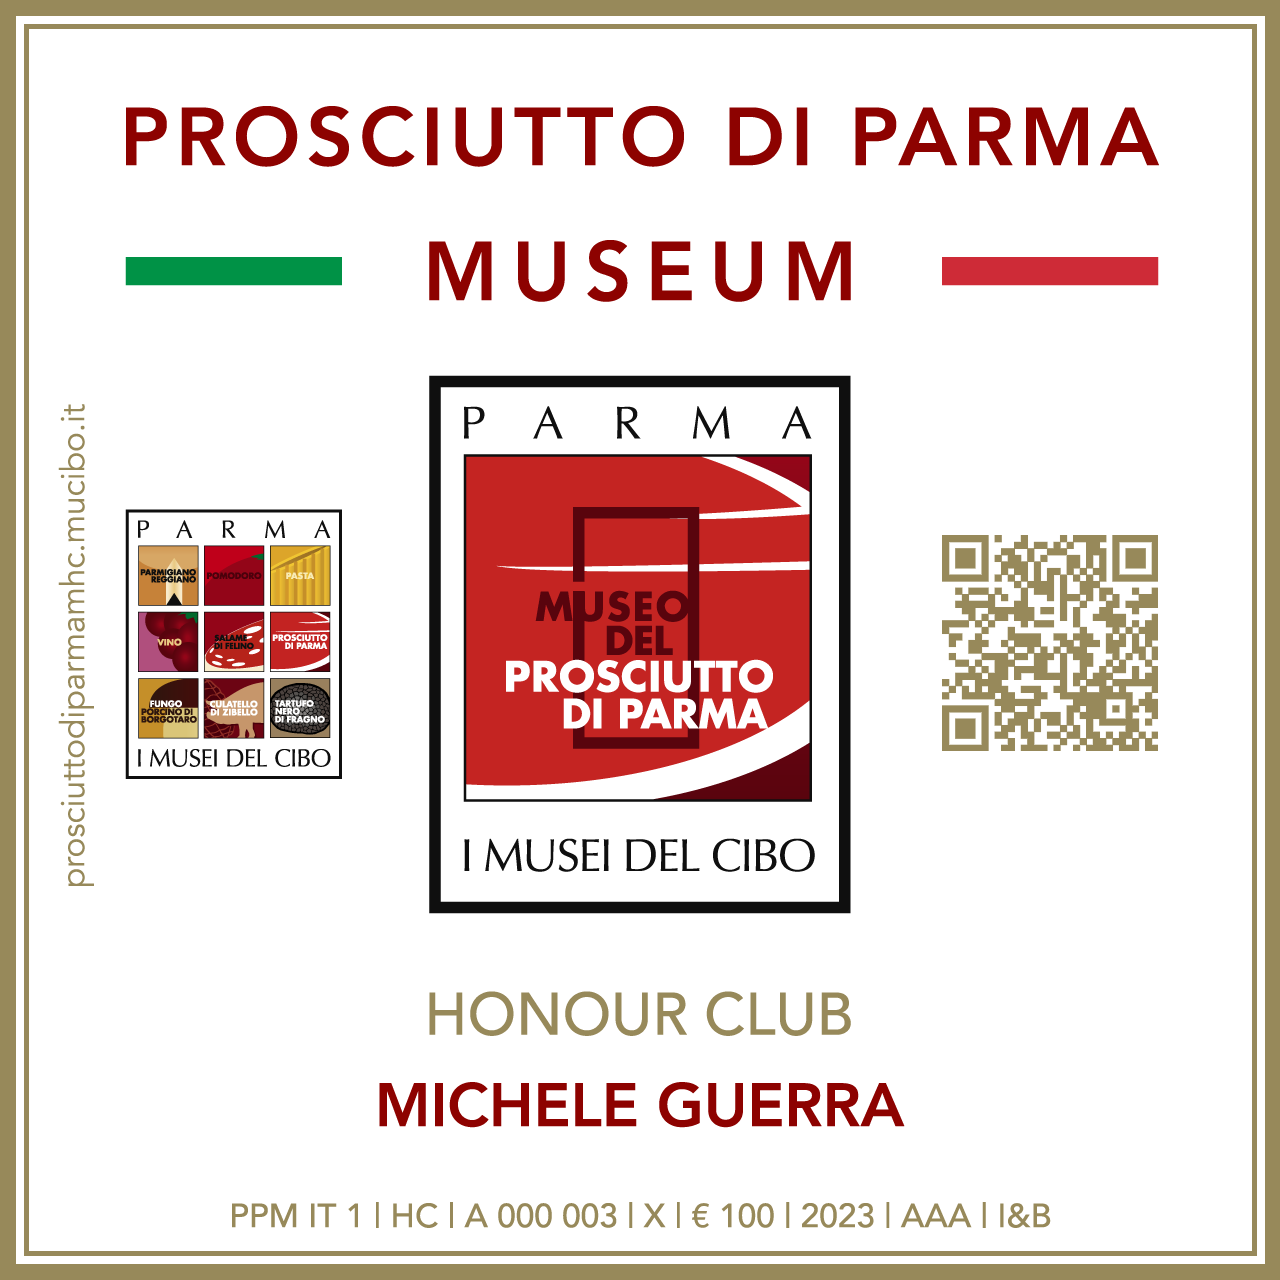 Prosciutto di Parma Museum Honour Club - Token Id A 000 003 - MICHELE GUERRA